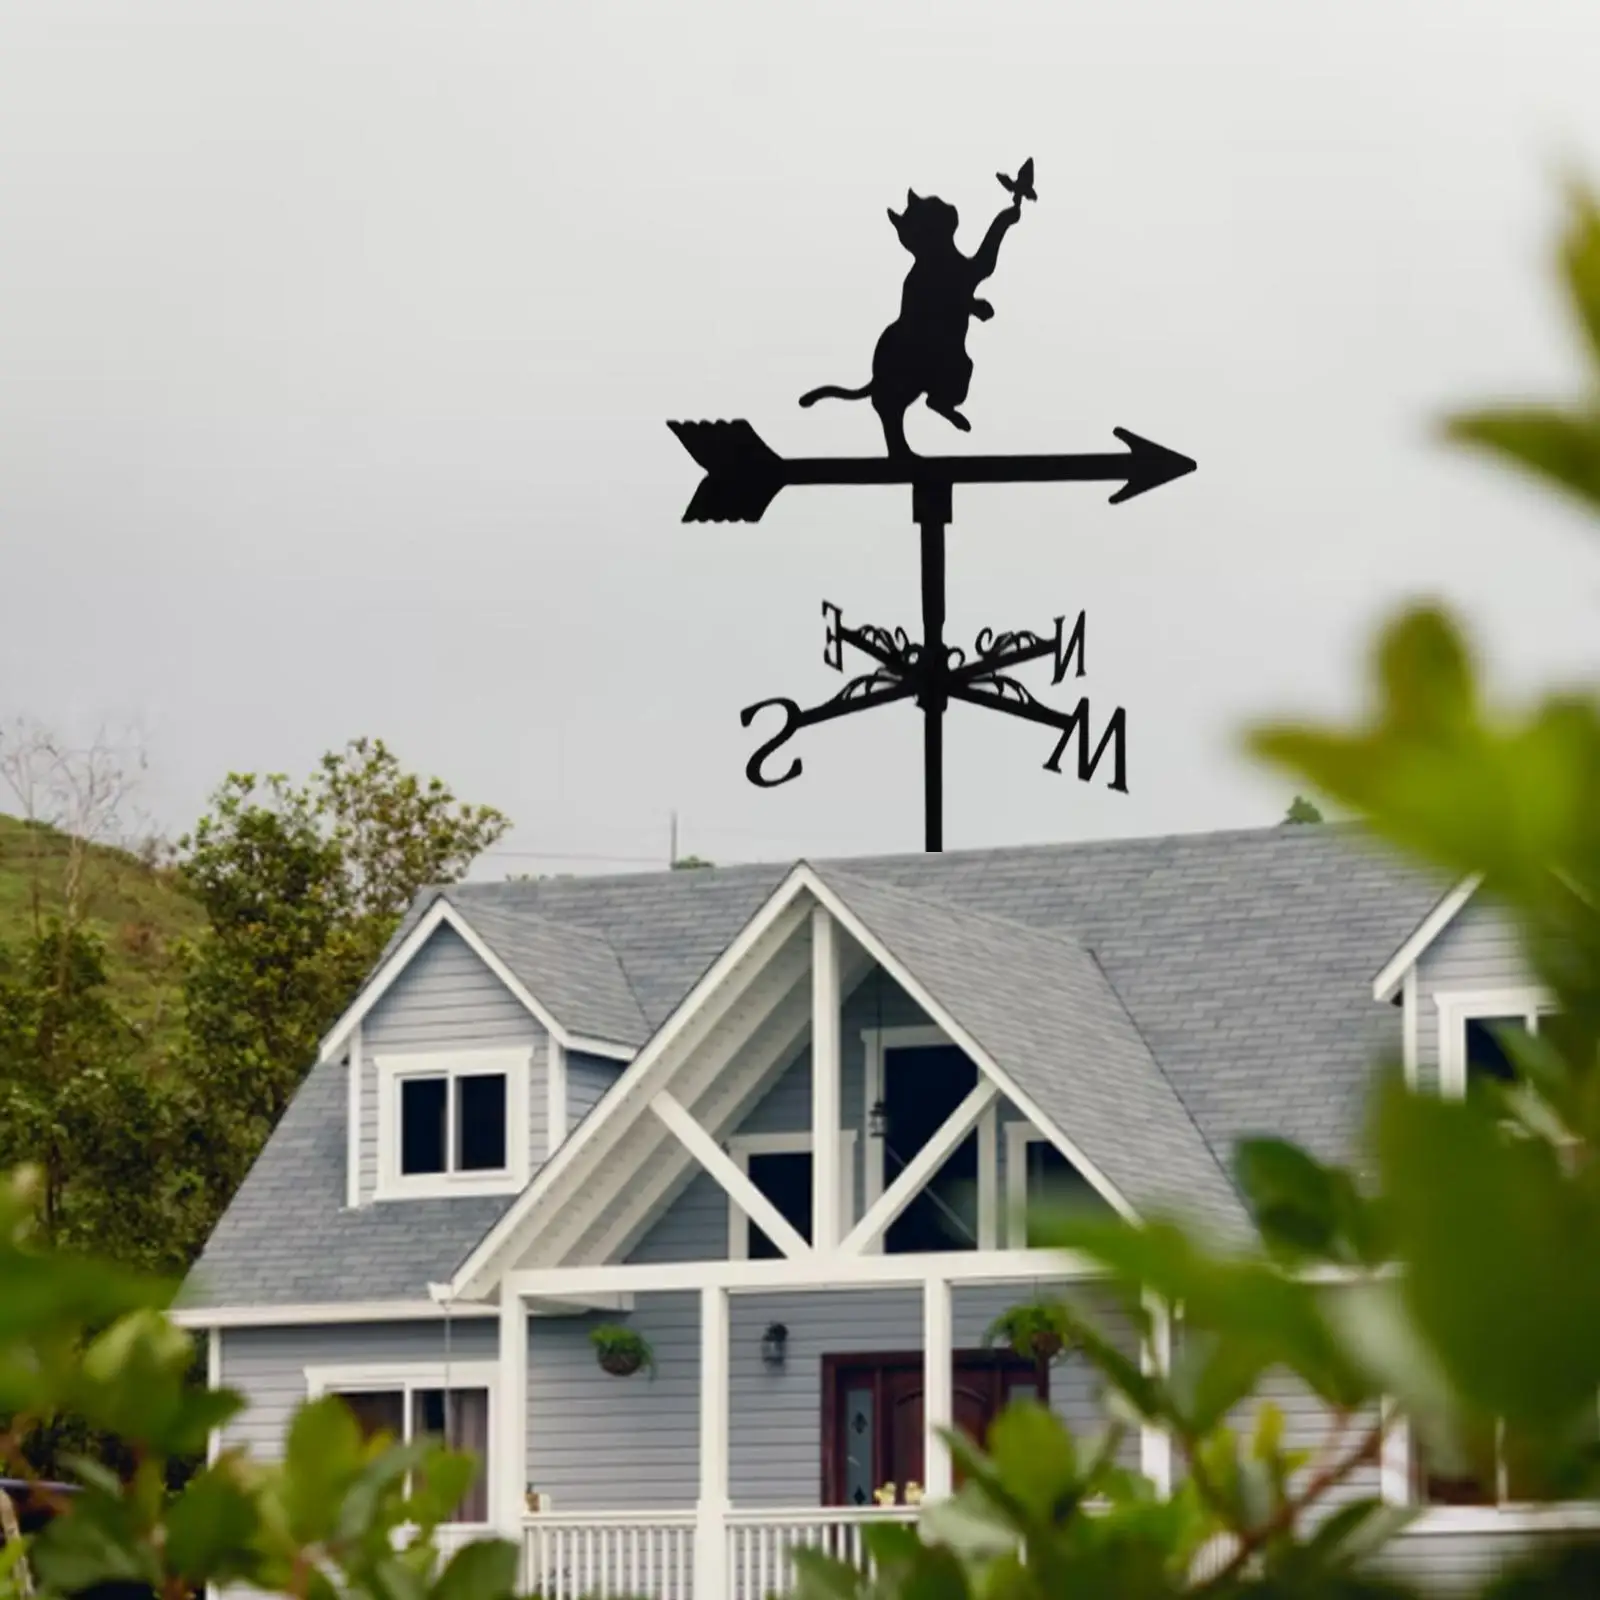 Roof Weather Vane Garden Farm Wind Direction Indicator Stainless Steel Scene Measuring Tool Garden Yard Decoration